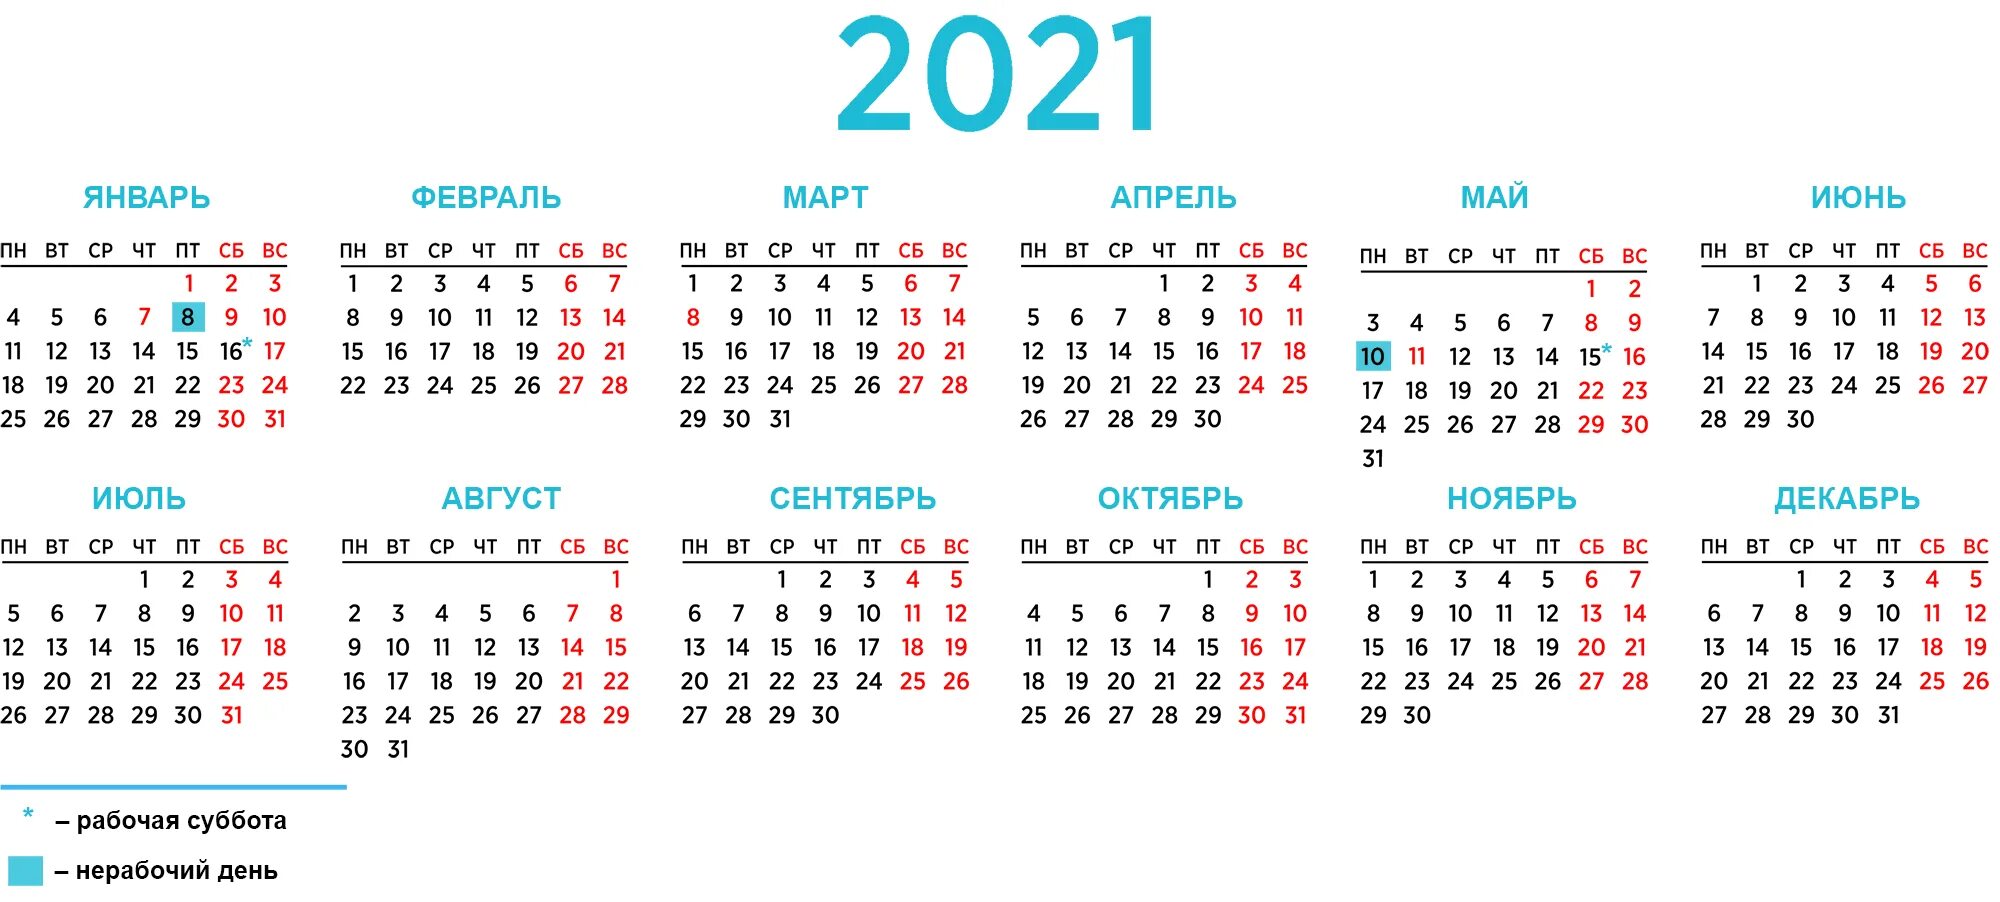 Даты календарь год. Производственный календарь 2021 Беларусь. Календарь 2021 года. Производственный календарь 2021. Производственный календарь на 2021 год.